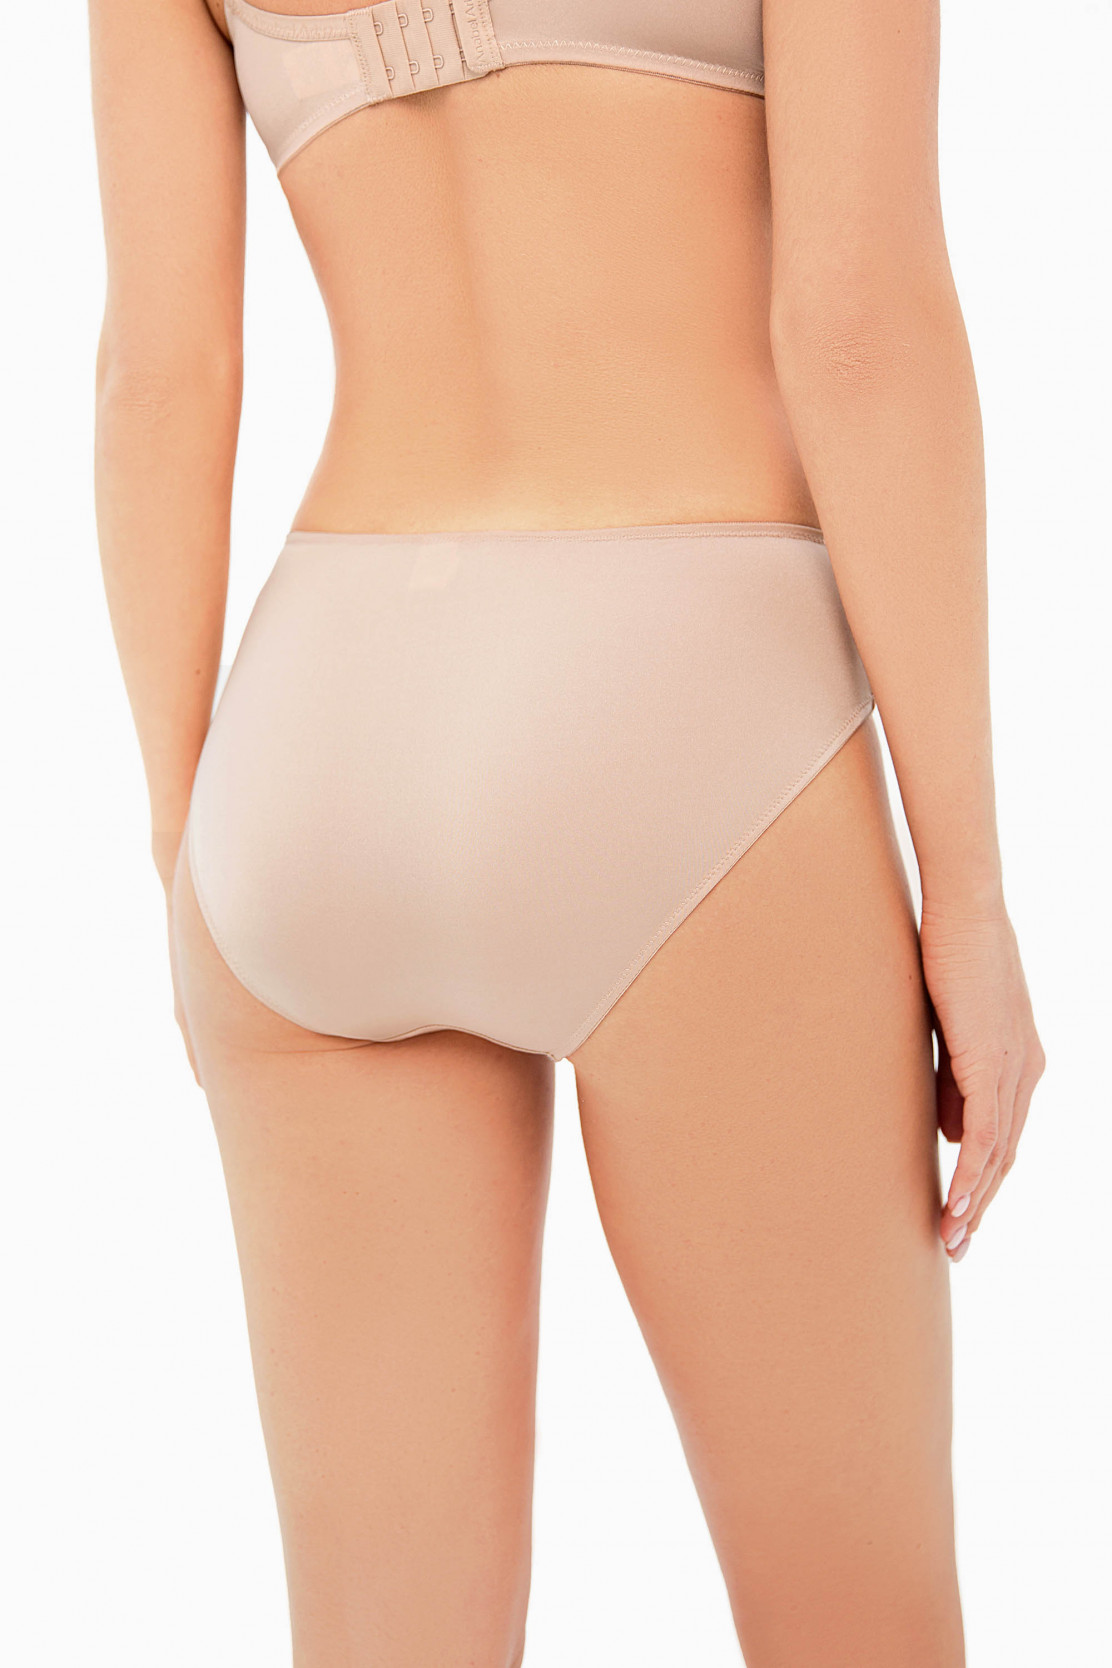 Women's panties, slip briefs s krughevom Anabel Arto 82221 - buy at